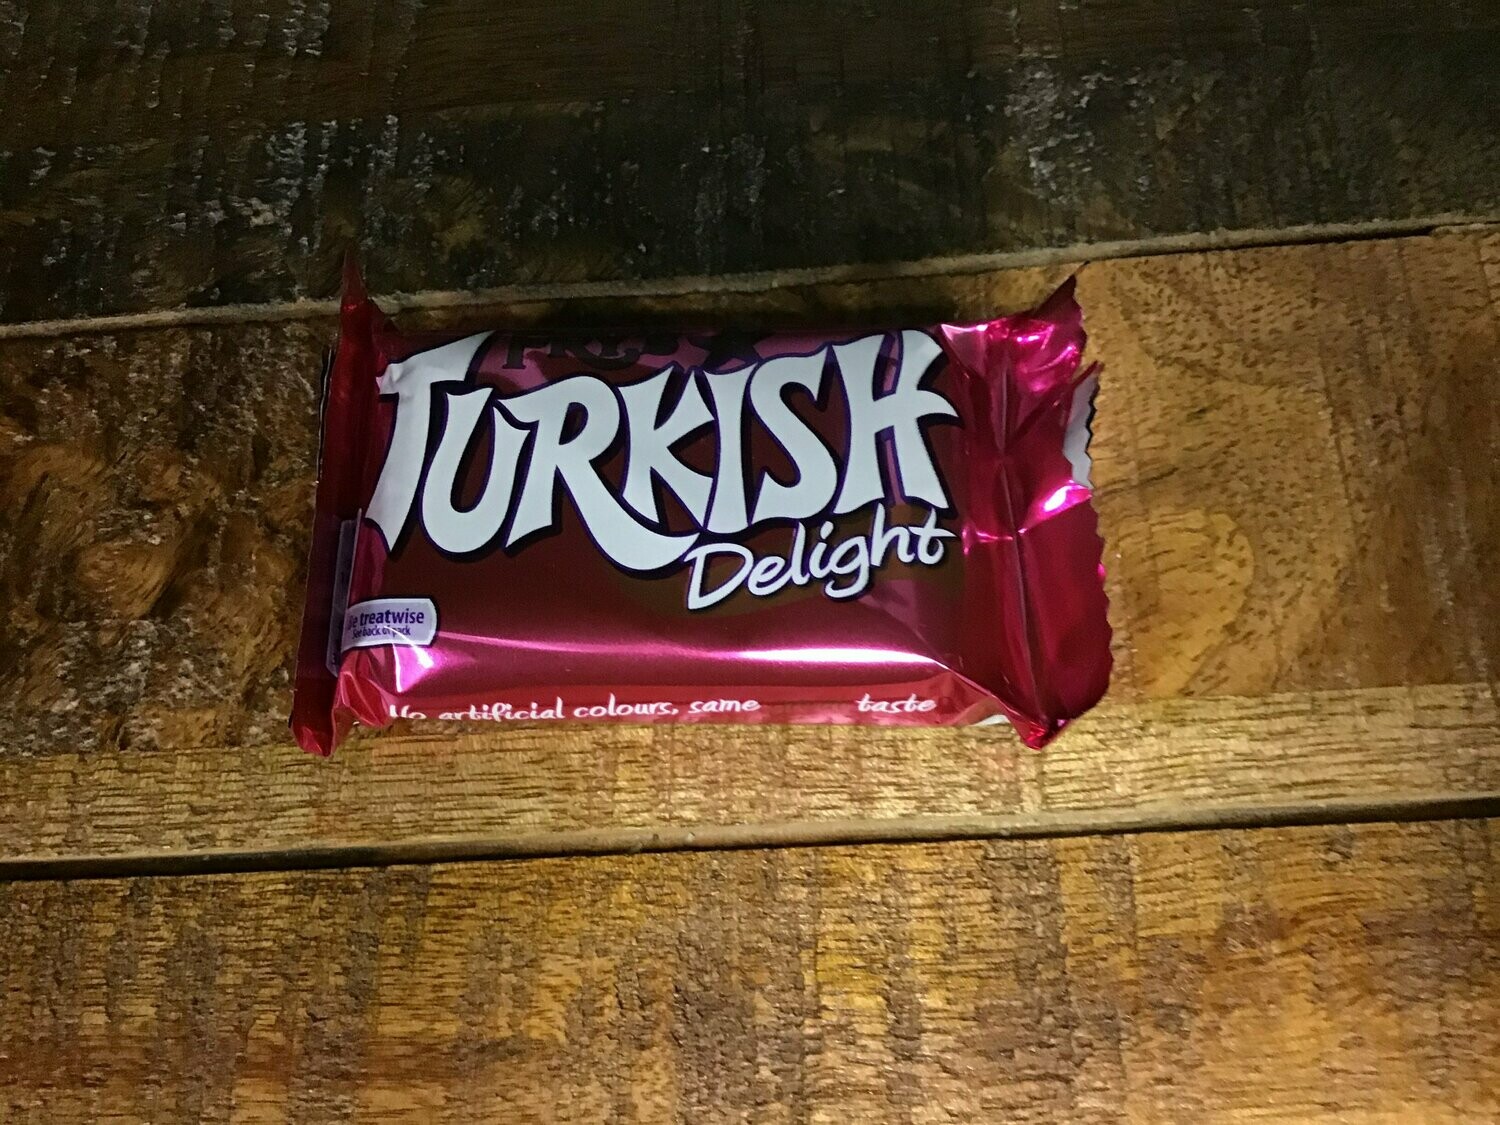 Frys Turkish Delight 51g